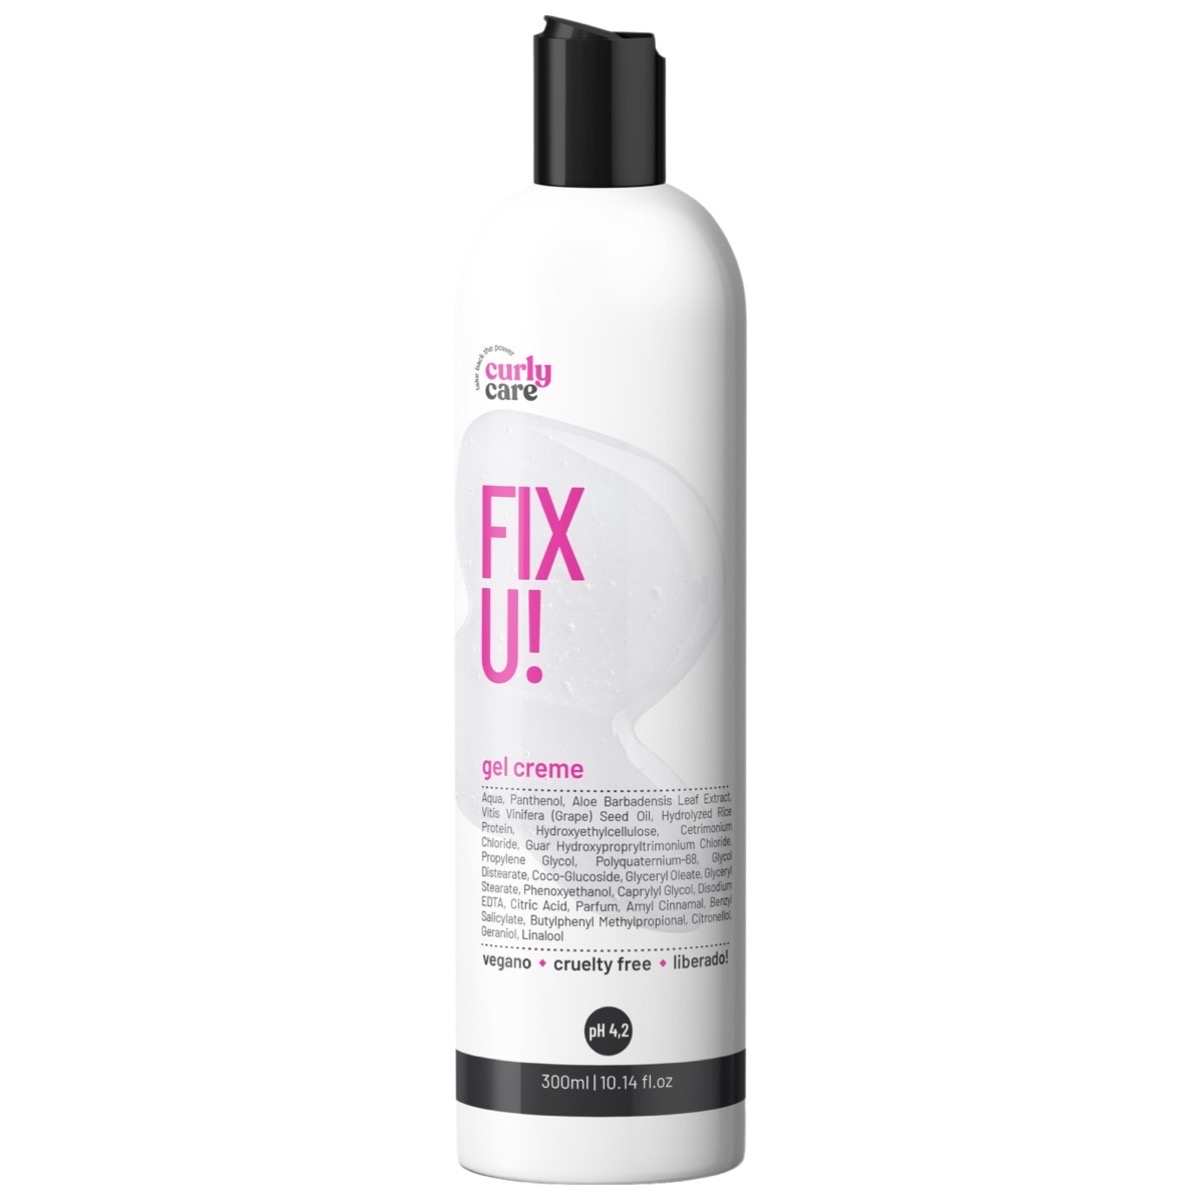 Kit Curly Care - Shampoo, Gel Creme Fixu E Acid C (3 Itens)